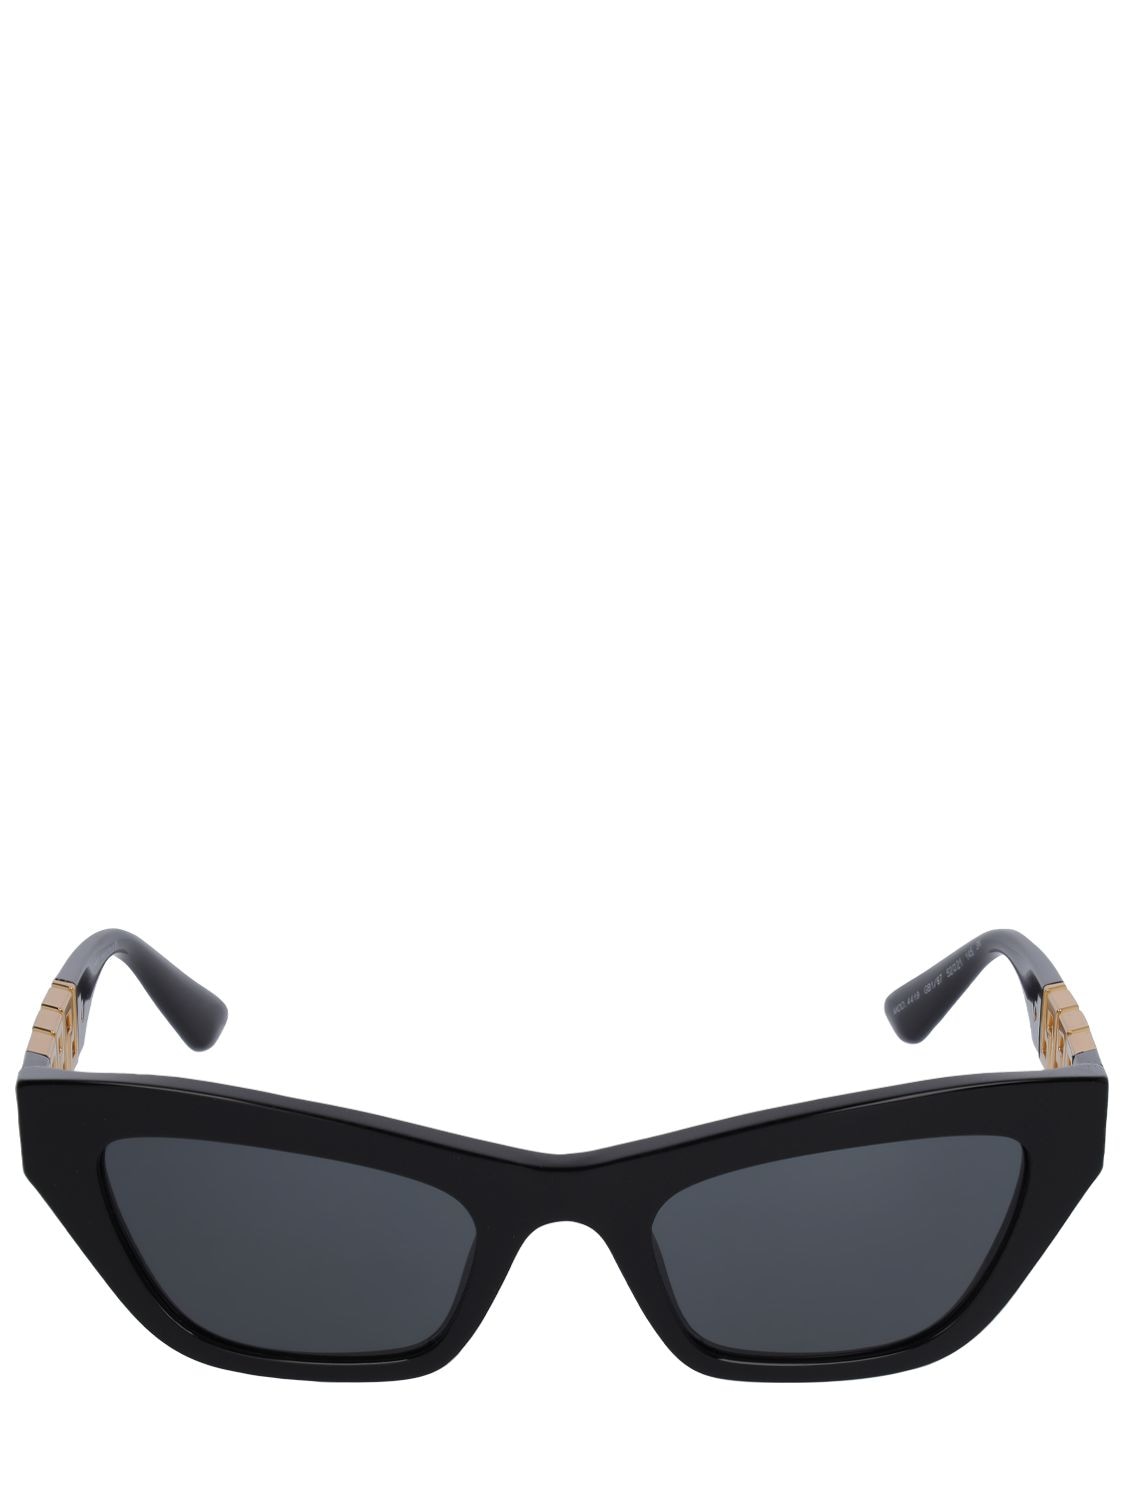 Greek Motif Cat-eye Sunglasses